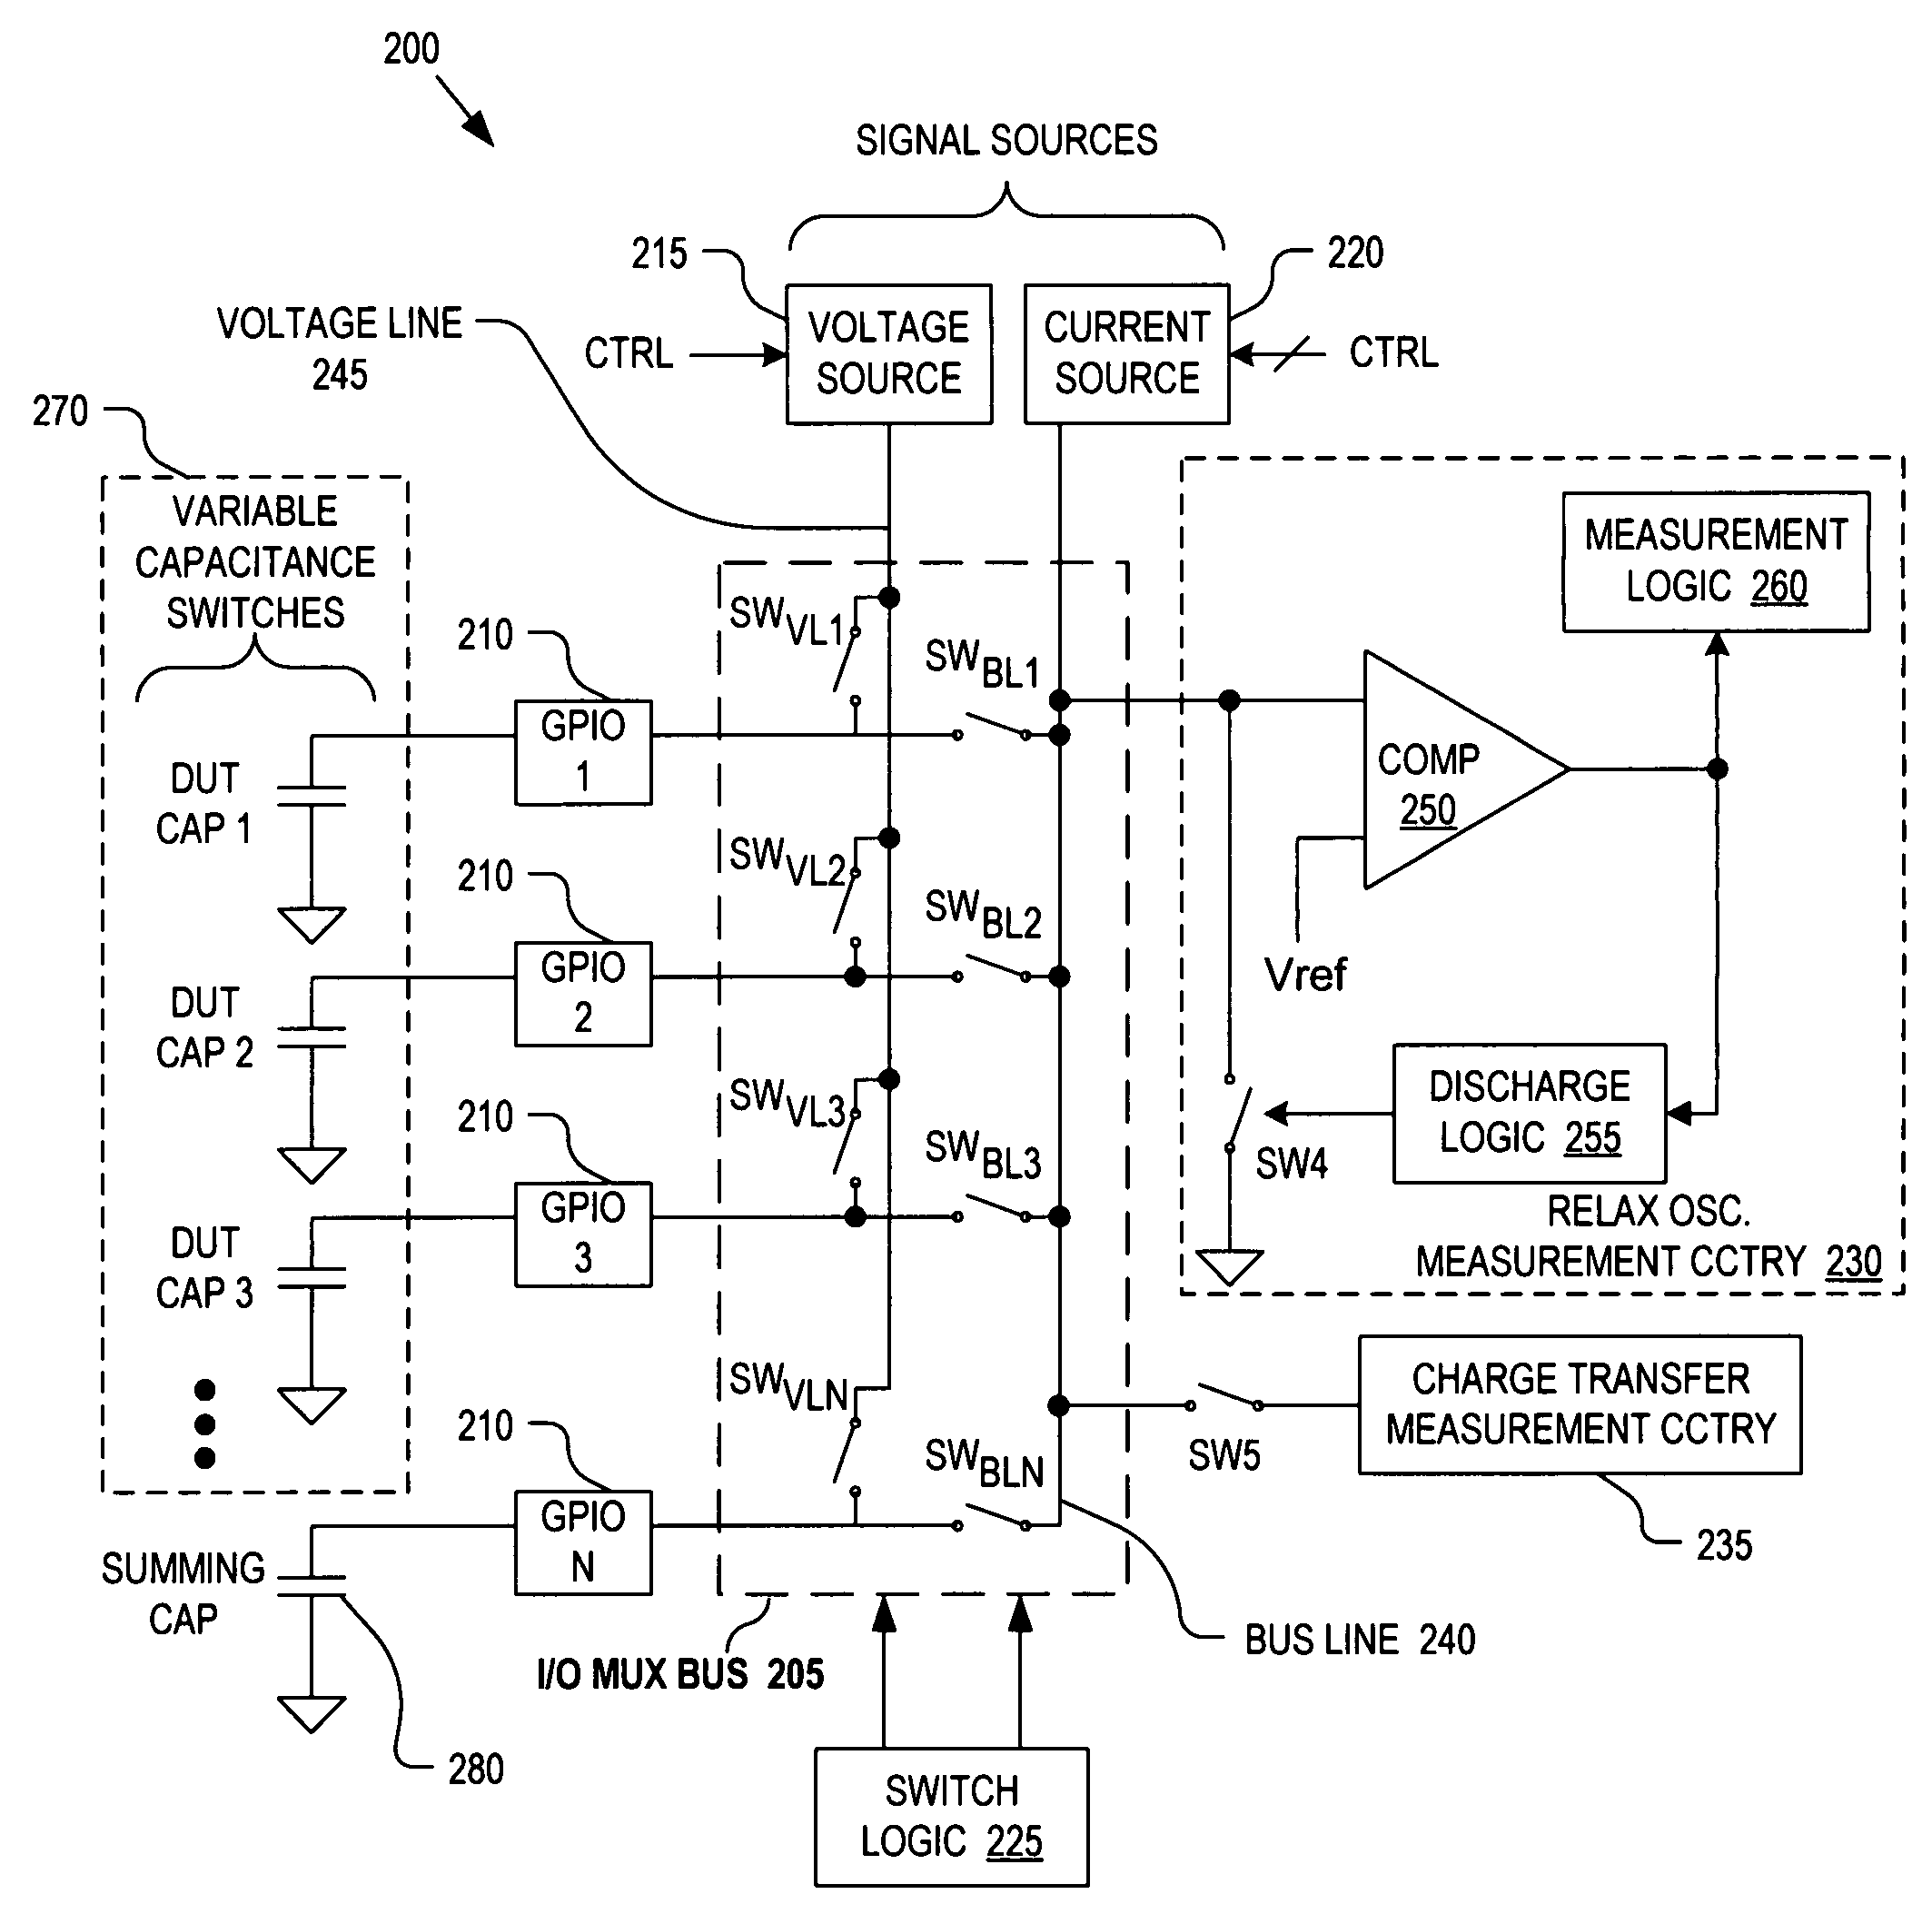 Input/output multiplexer bus